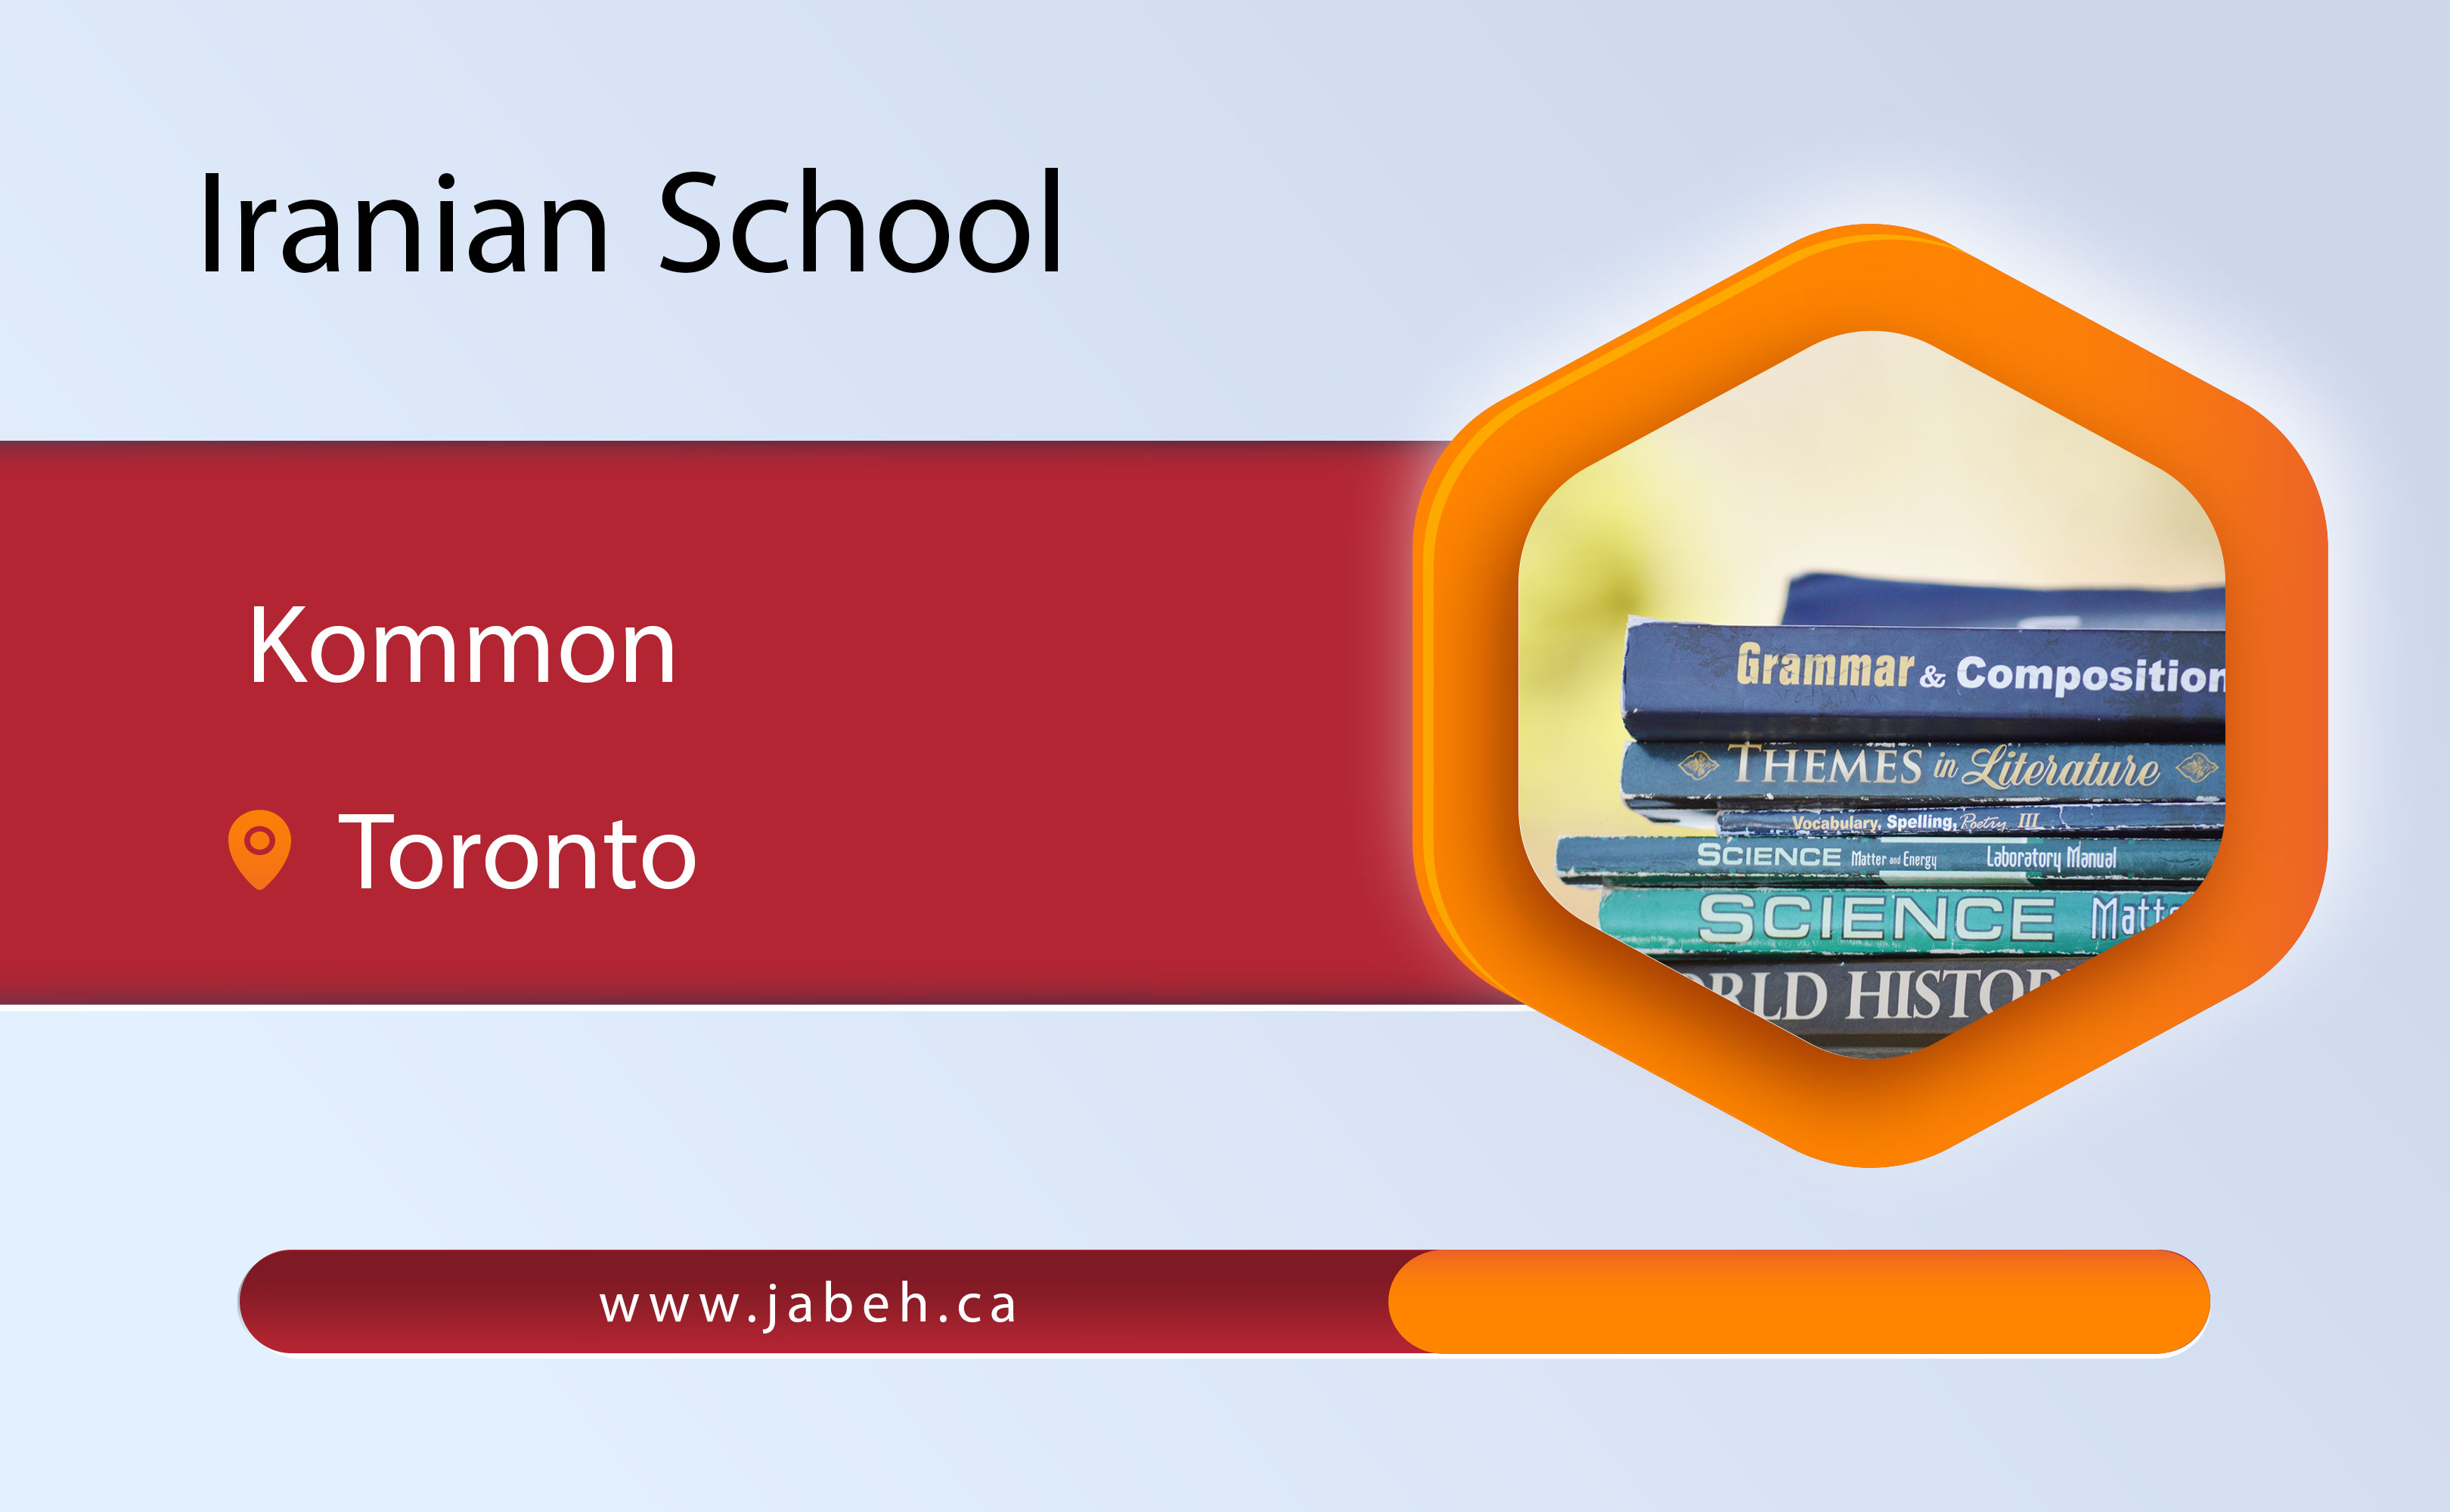 Komon Iranian School in Toronto